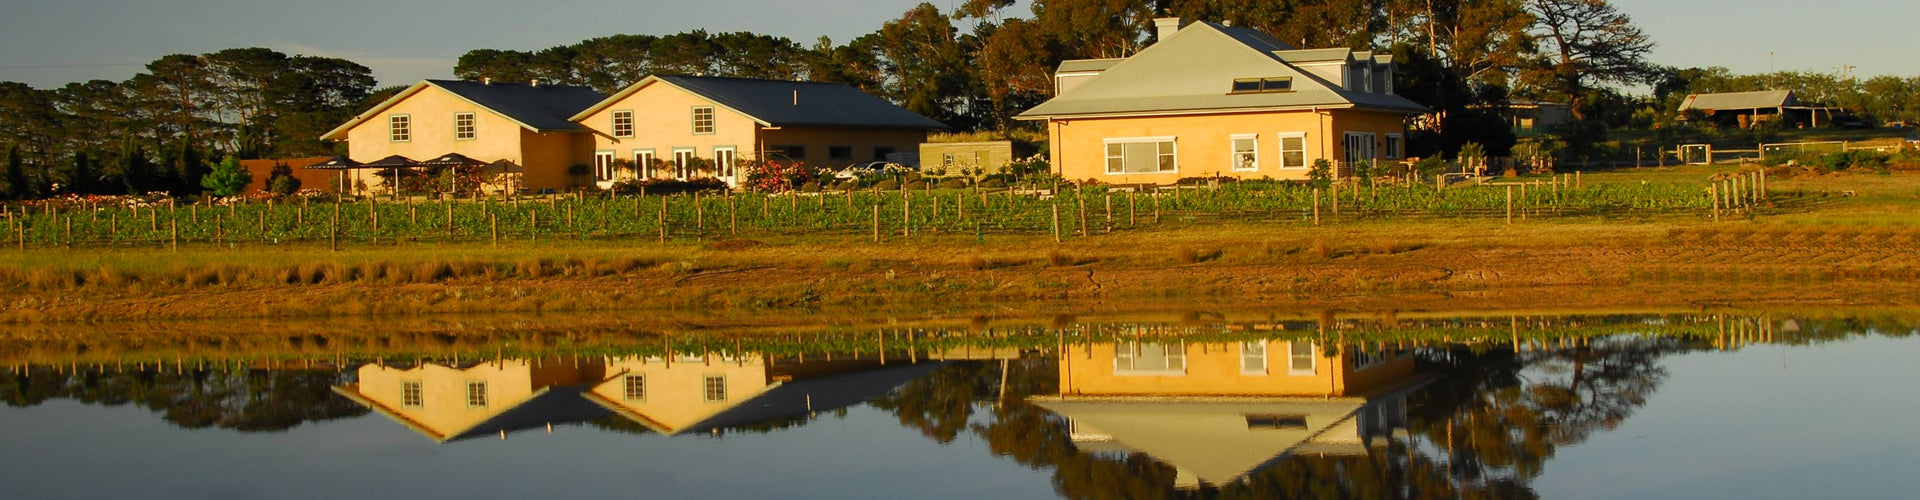 Lethbridge Winery in the Geelong region of Victoria, Australia